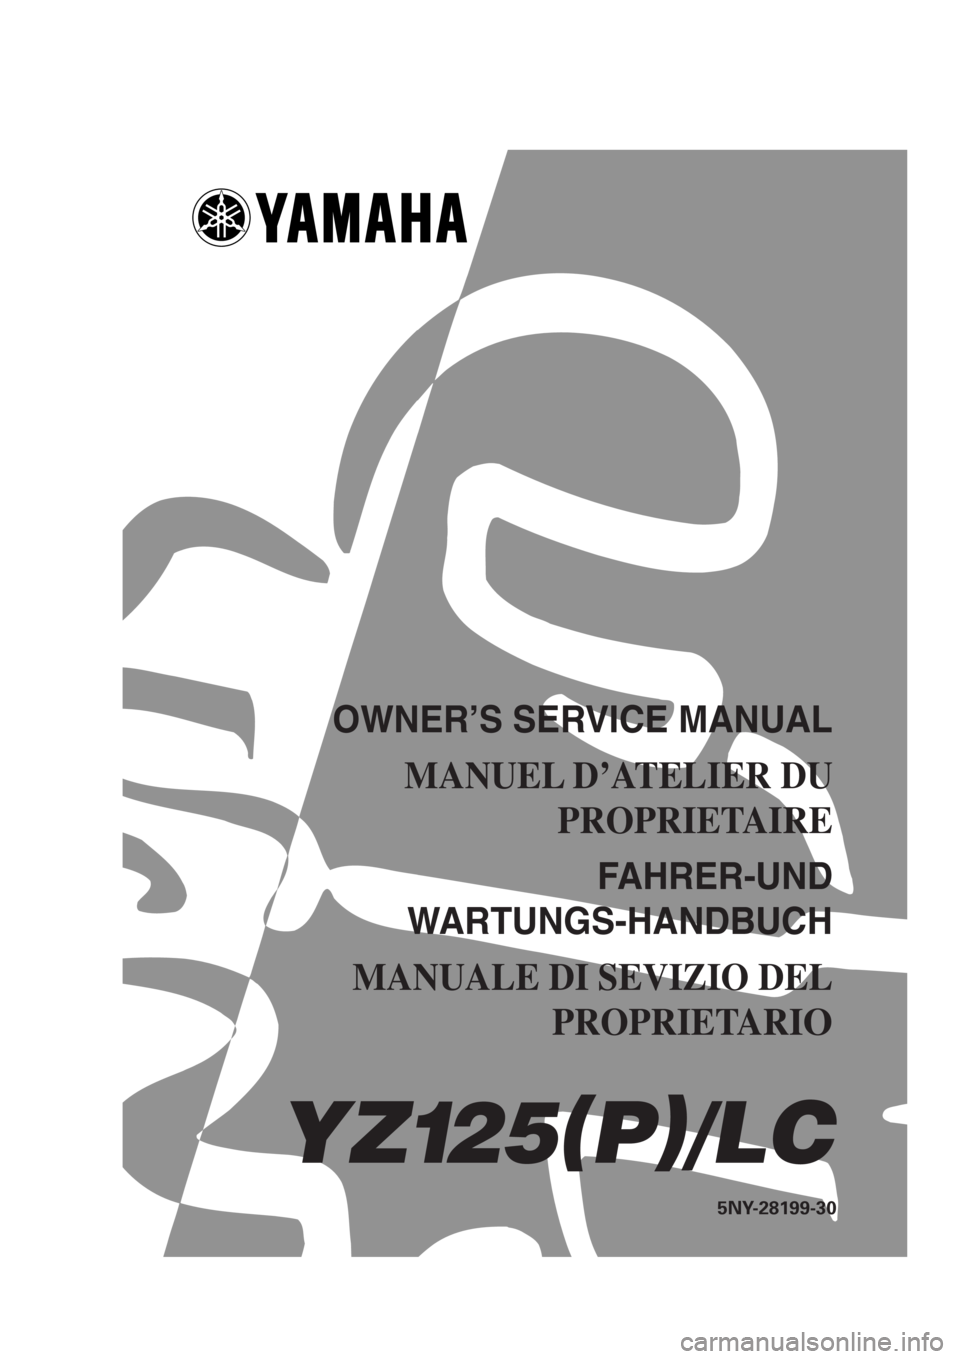 YAMAHA YZ125LC 2002  Betriebsanleitungen (in German) OWNER’S SERVICE MANUAL
MANUEL D’ATELIER DU 
PROPRIETAIRE
FAHRER-UND 
WARTUNGS-HANDBUCH
MANUALE DI SEVIZIO DEL
PROPRIETARI
O
YZ125(
P)
/LC
5NY-28199-30 JAPAN
8 ×1!H)
YZ125(
P)
/LC 